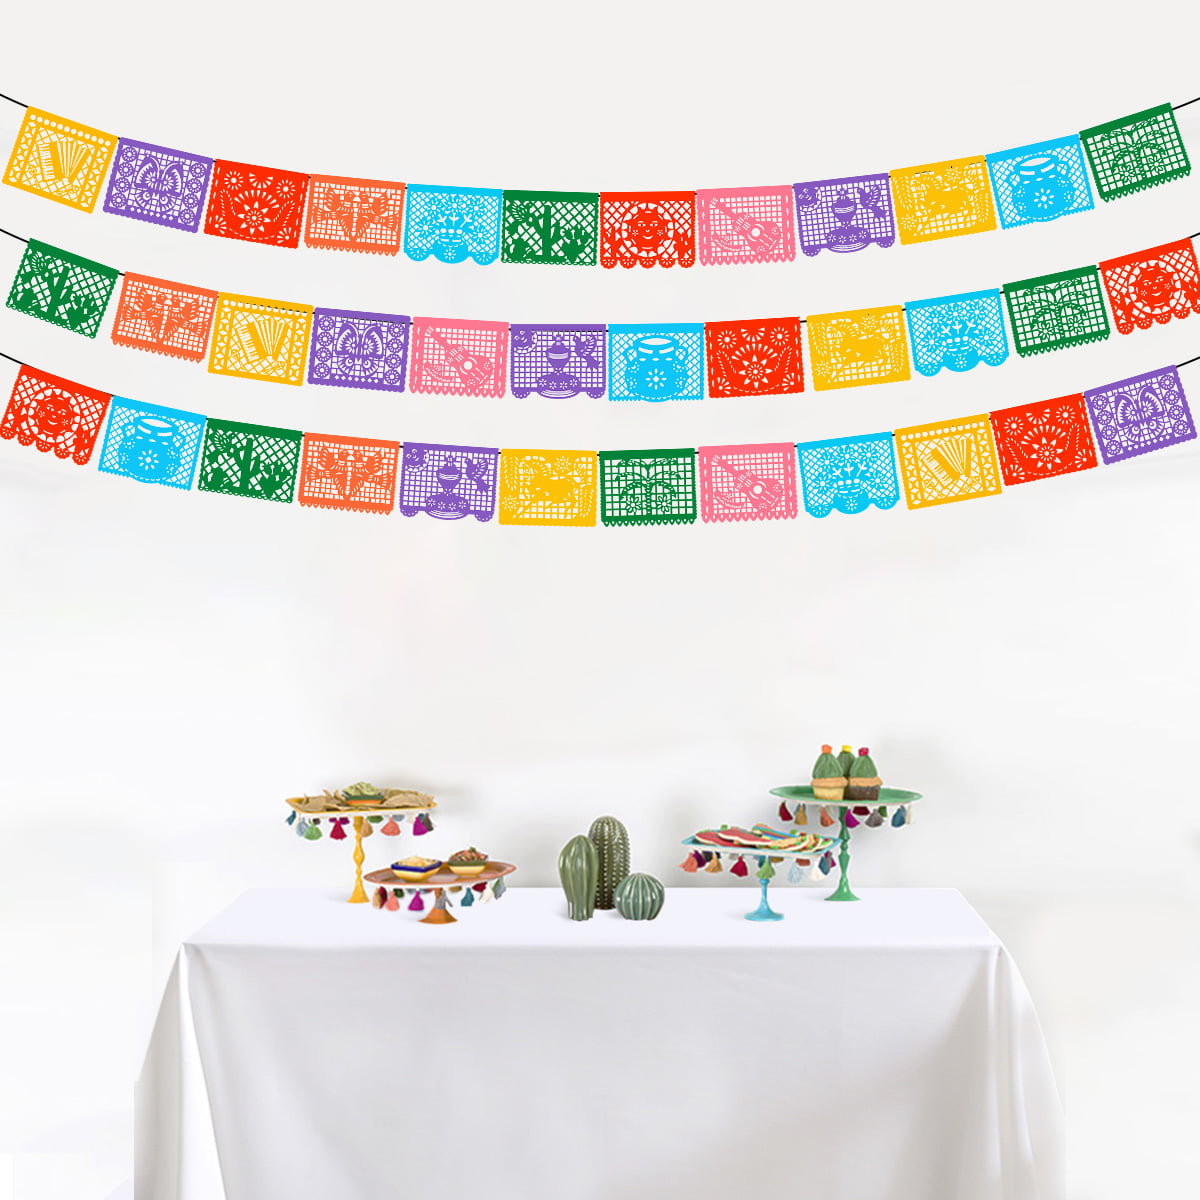 98+ pcs|Mexican Themed Fiesta Party Supplies Set|fiesta mexico|mexican Themed party|fiesta Party decorations|5 de Mayo Celebracion